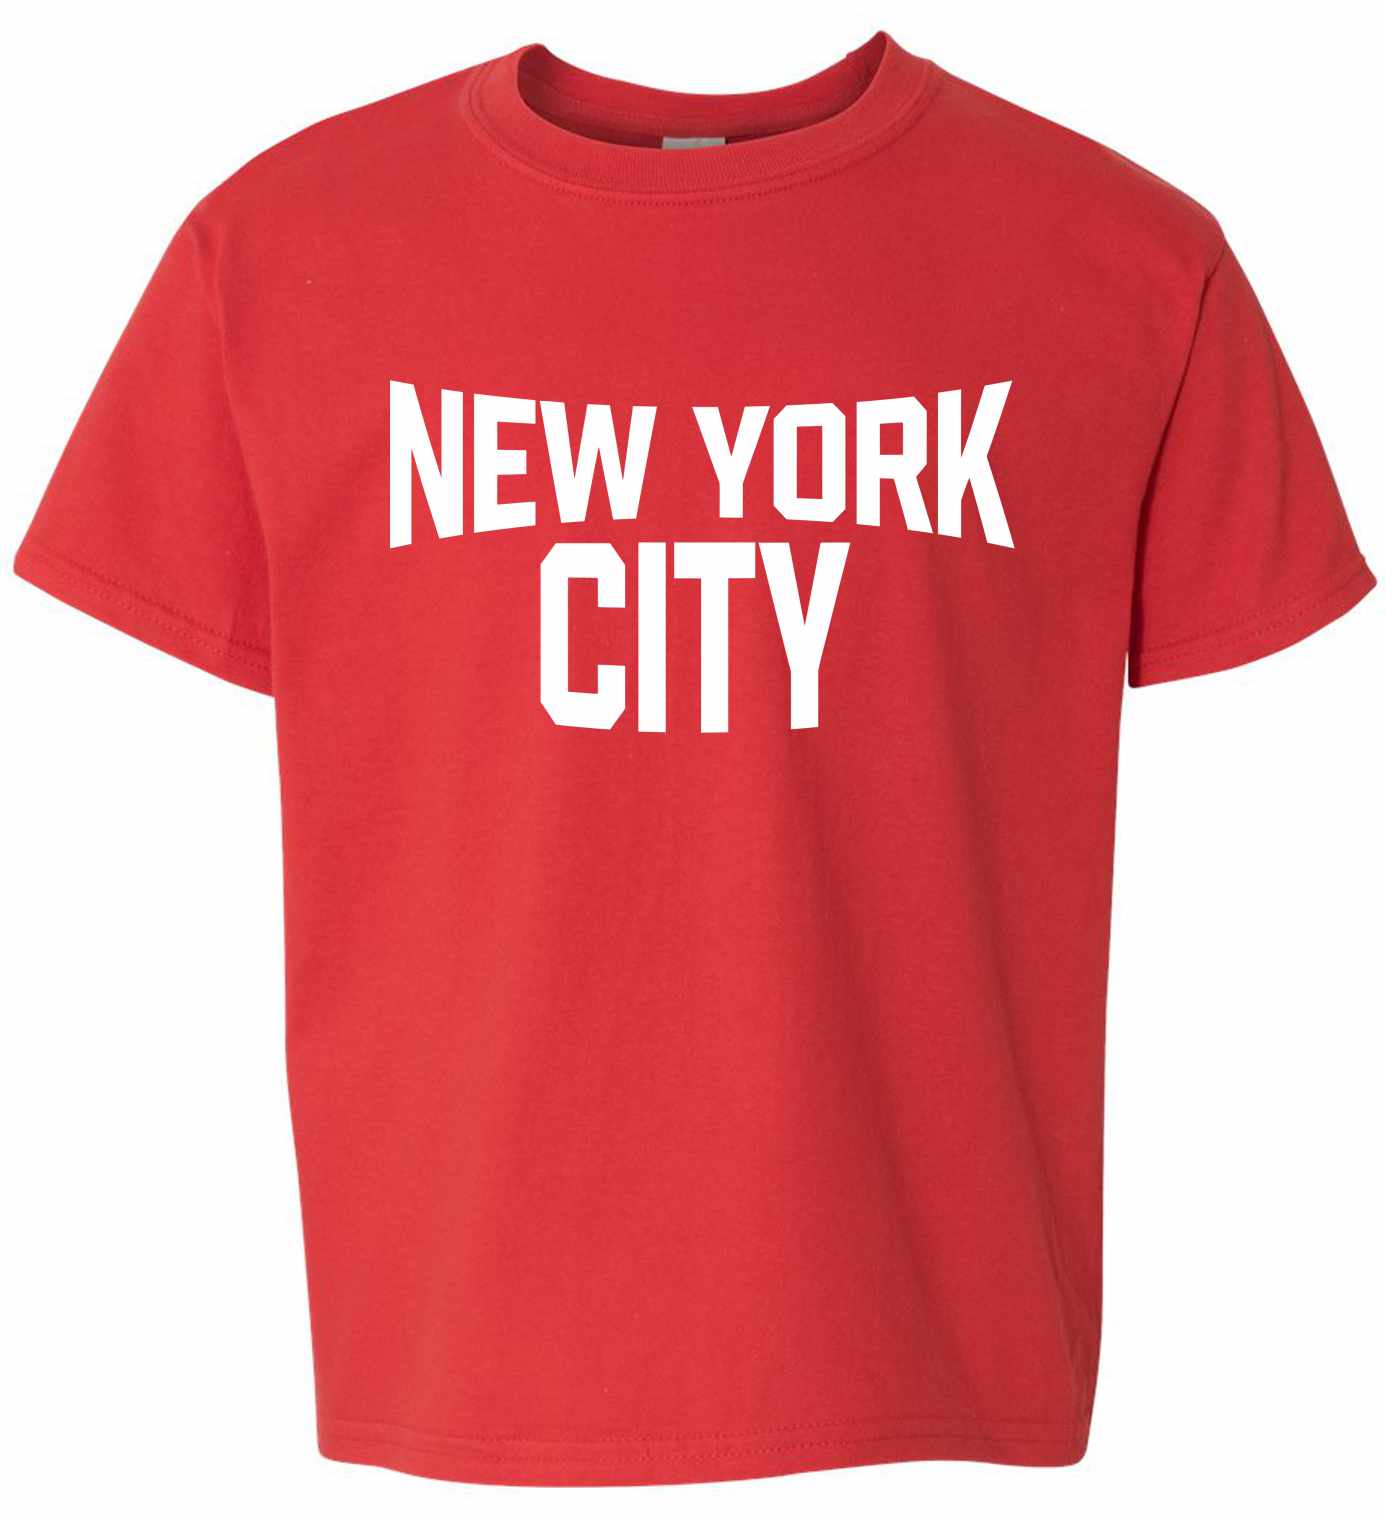 New York City on Kids T-Shirt